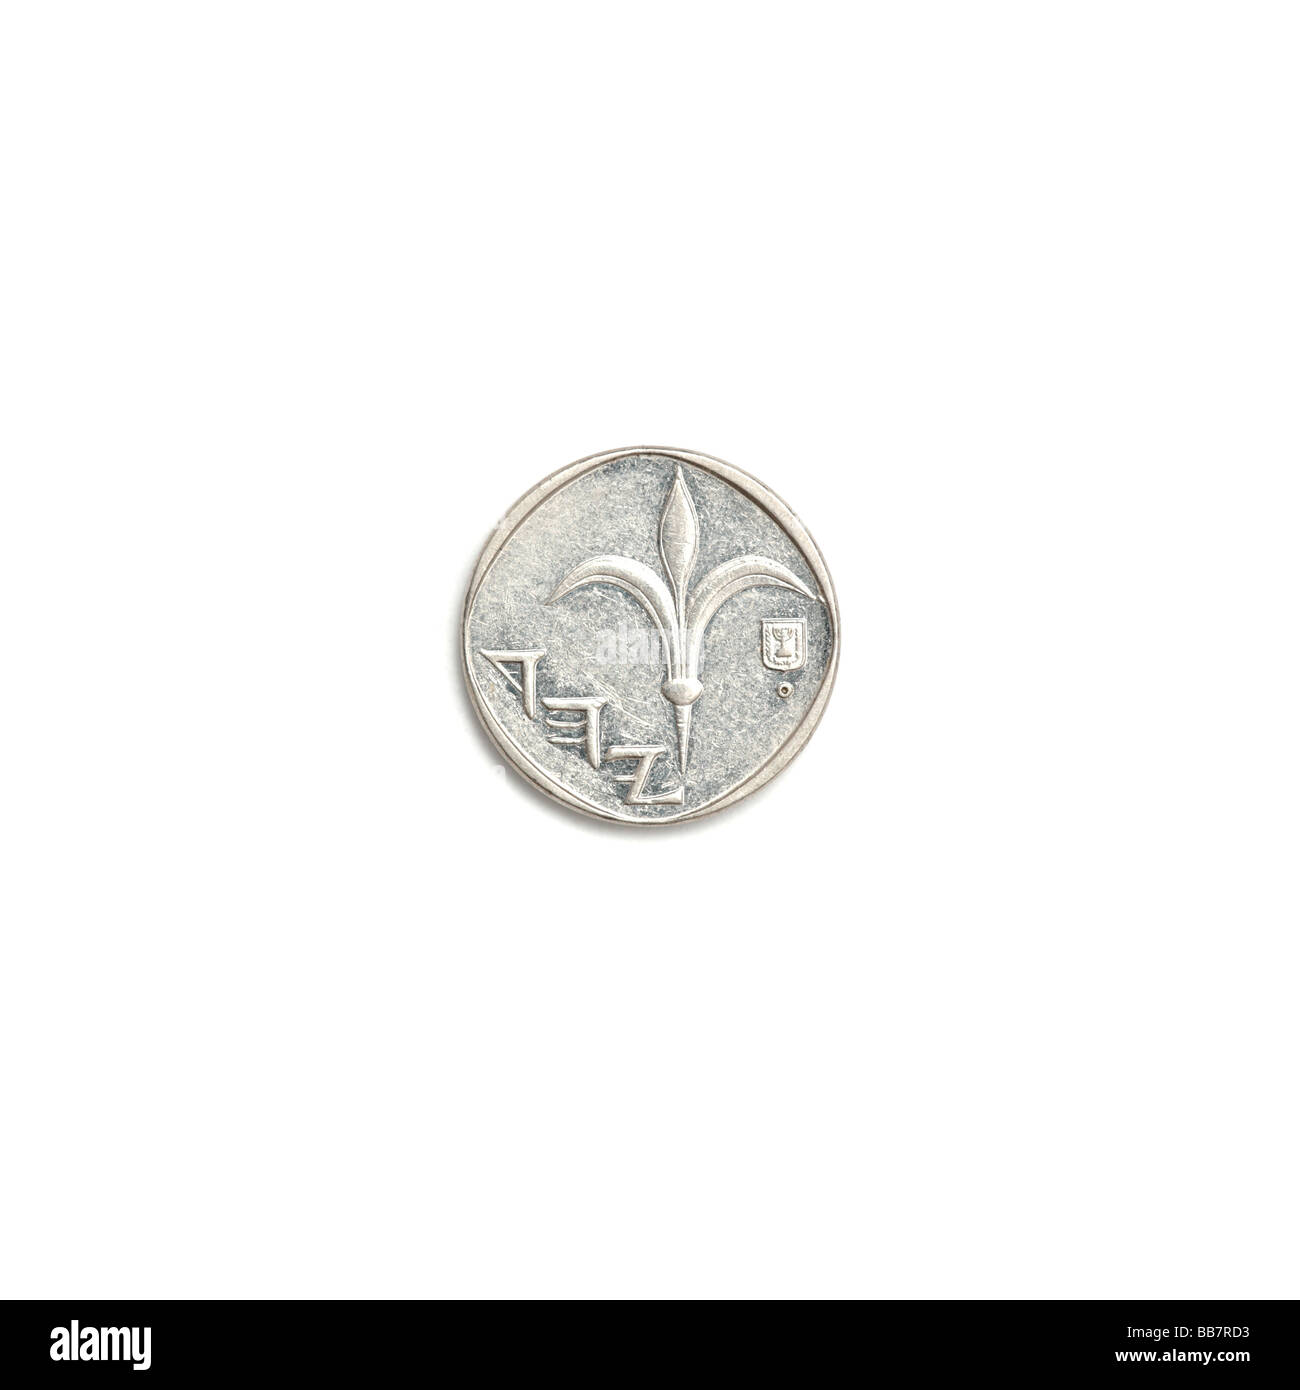 "Moneta israeliana - Nuovo sheqel' Foto Stock